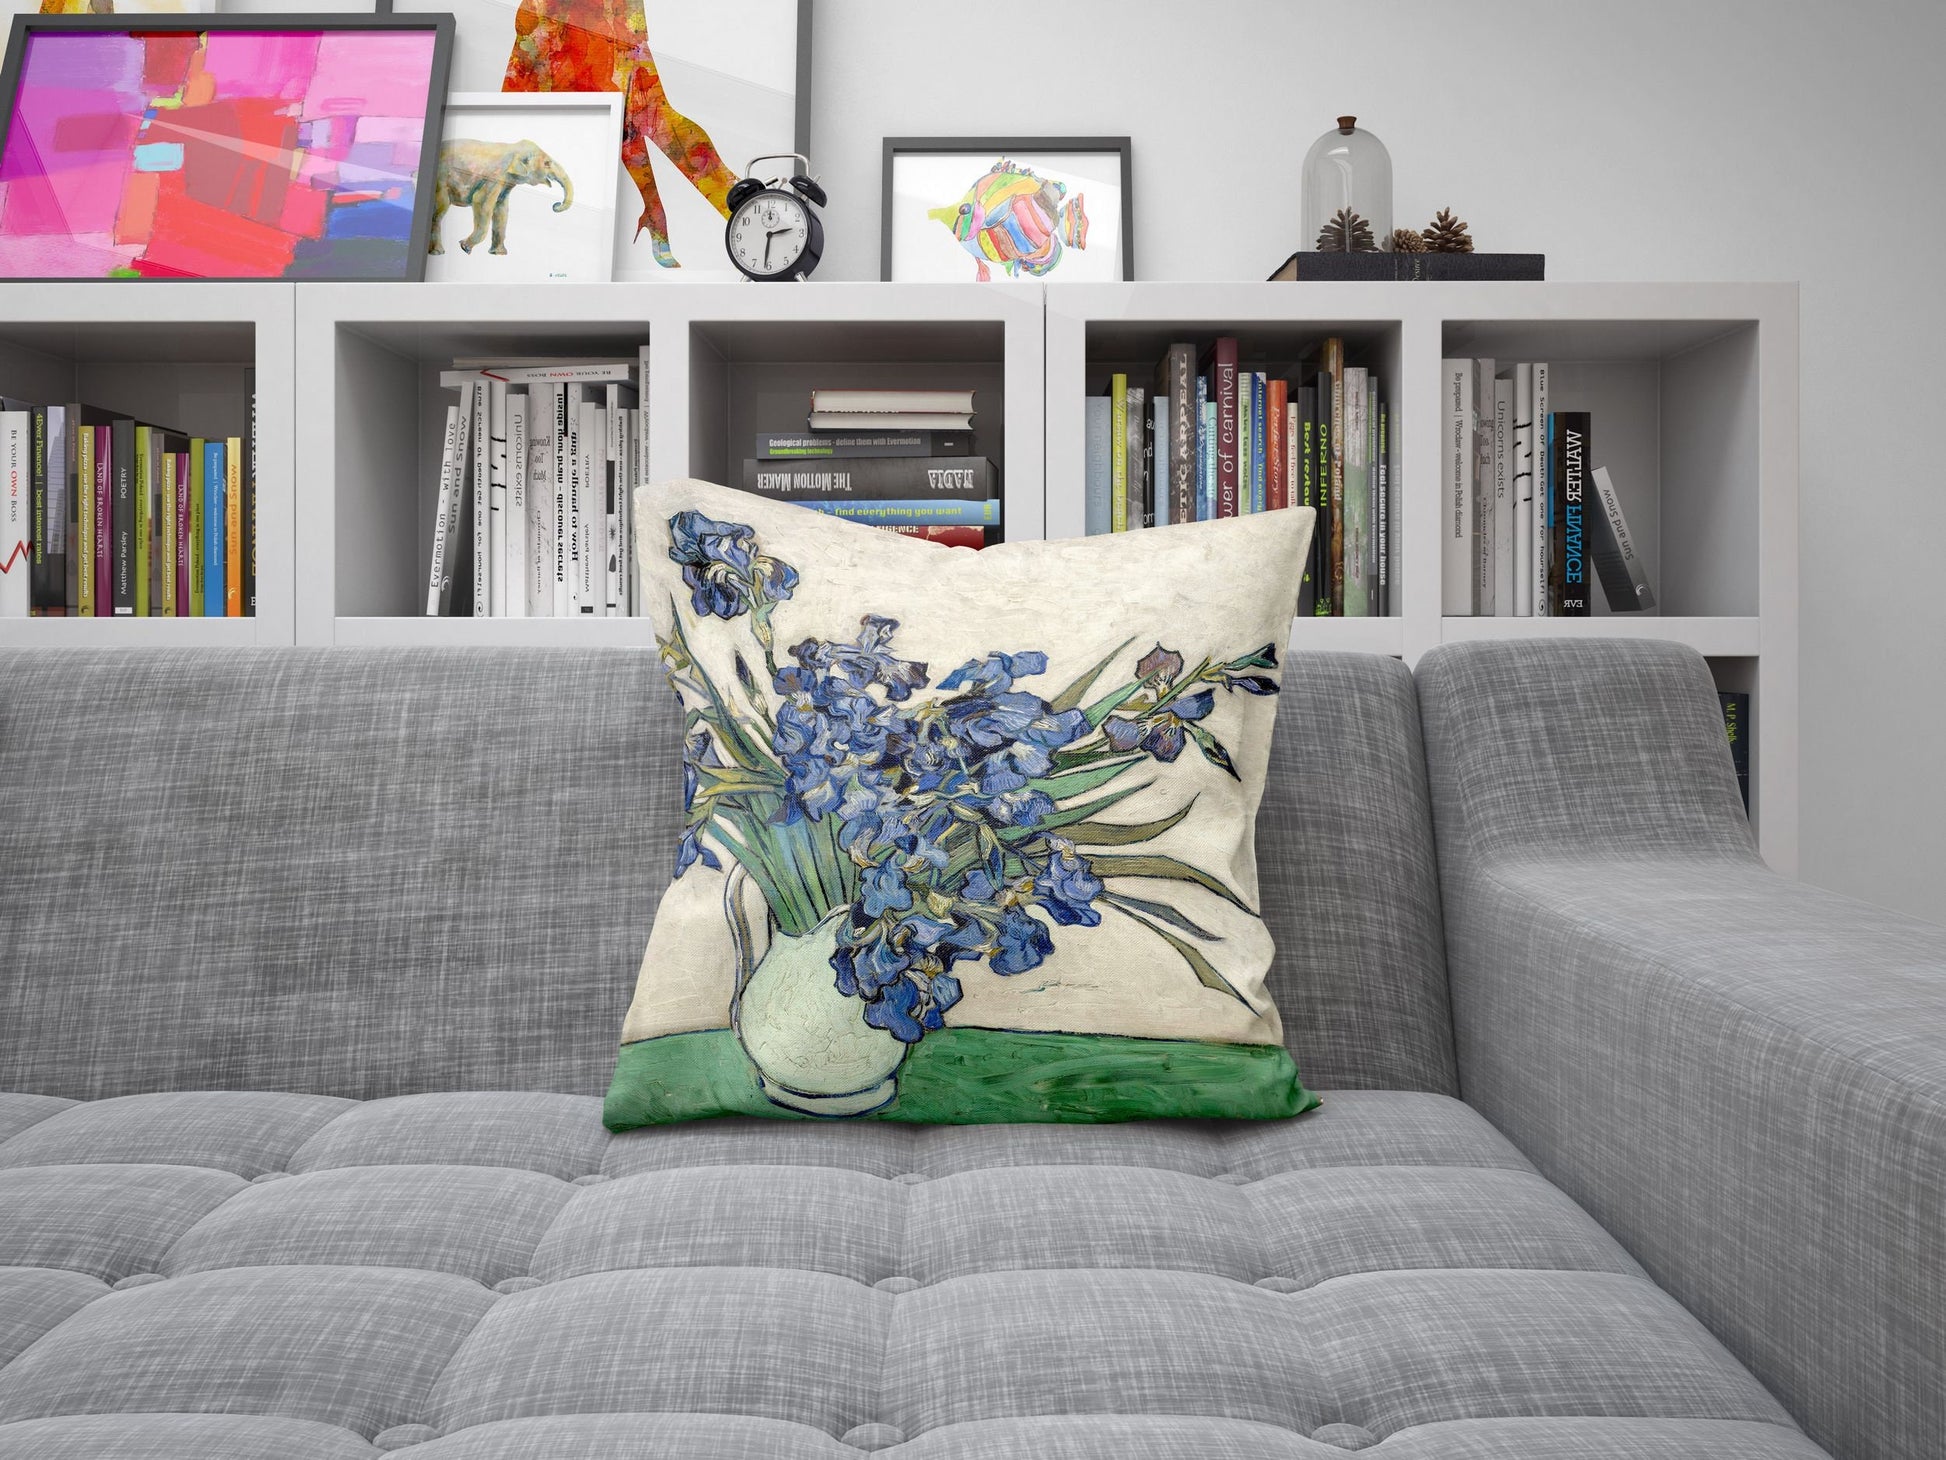 Vincent Van Gogh Irises, Toss Pillow, Abstract Throw Pillow Cover, Artist Pillow, 22X22 Pillow Cover, Farmhouse Pillow, Abstract Decor